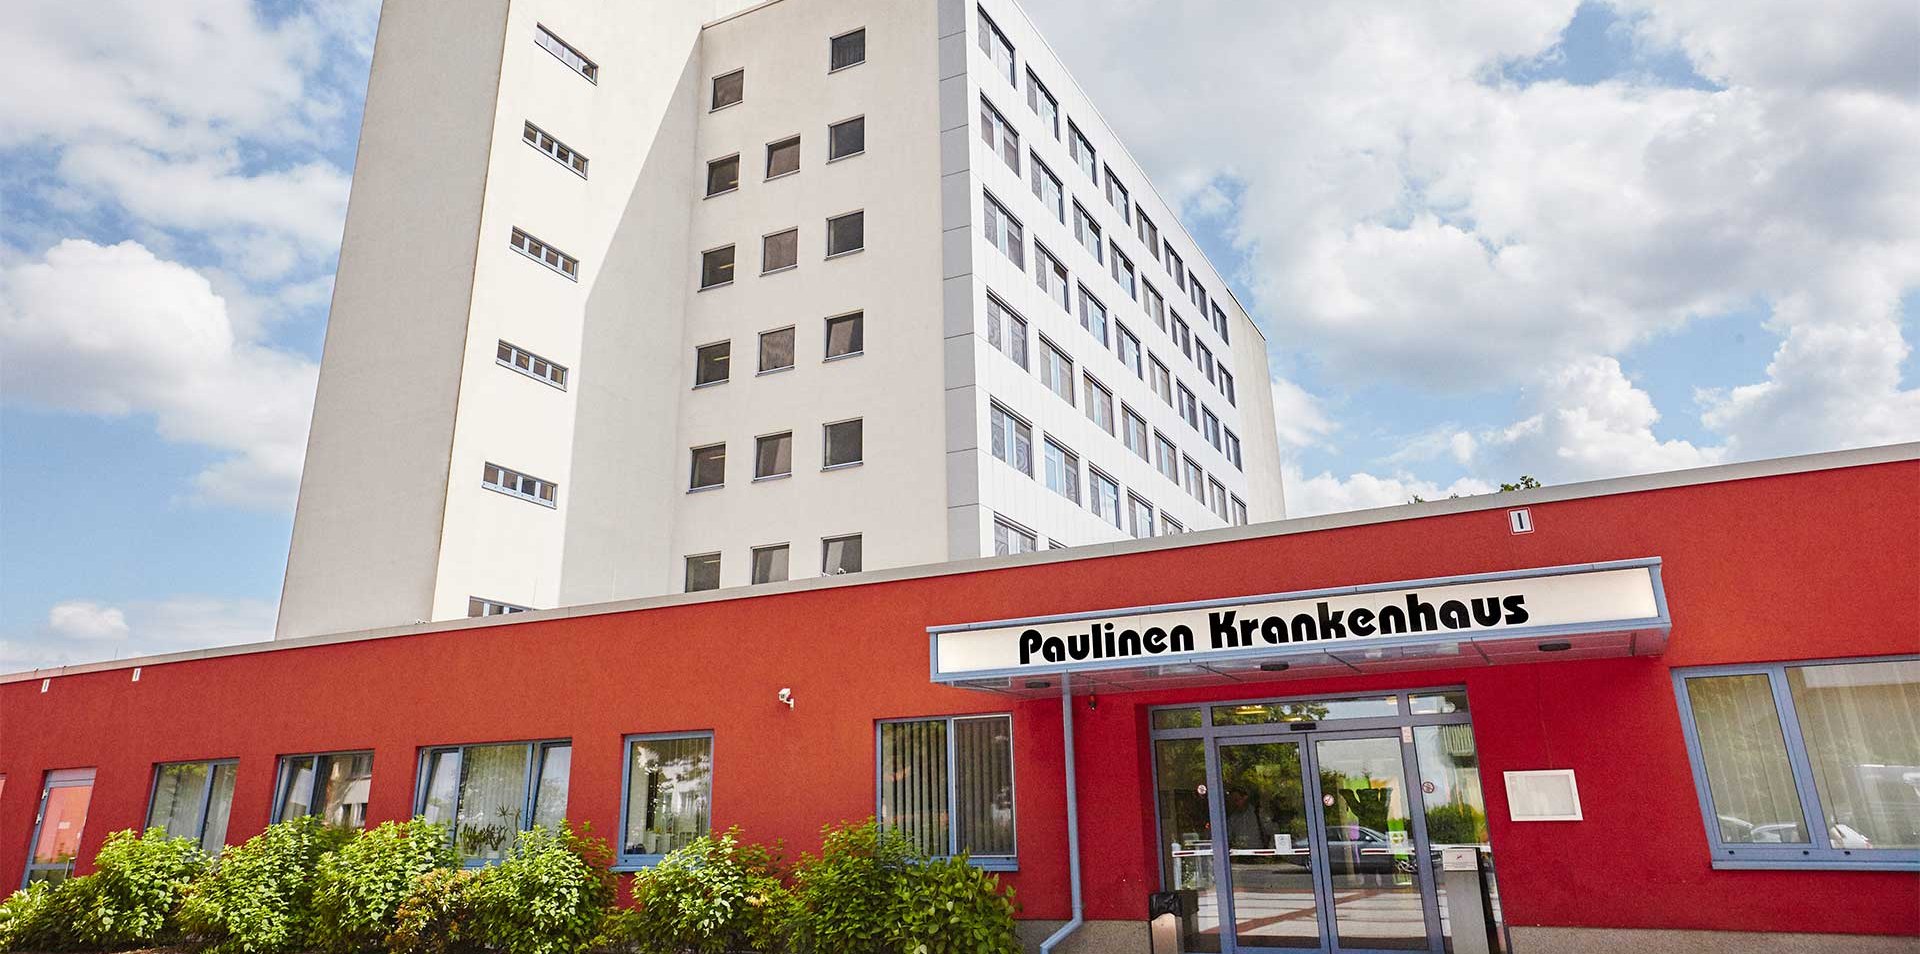 Building Paulinenkrankenhaus